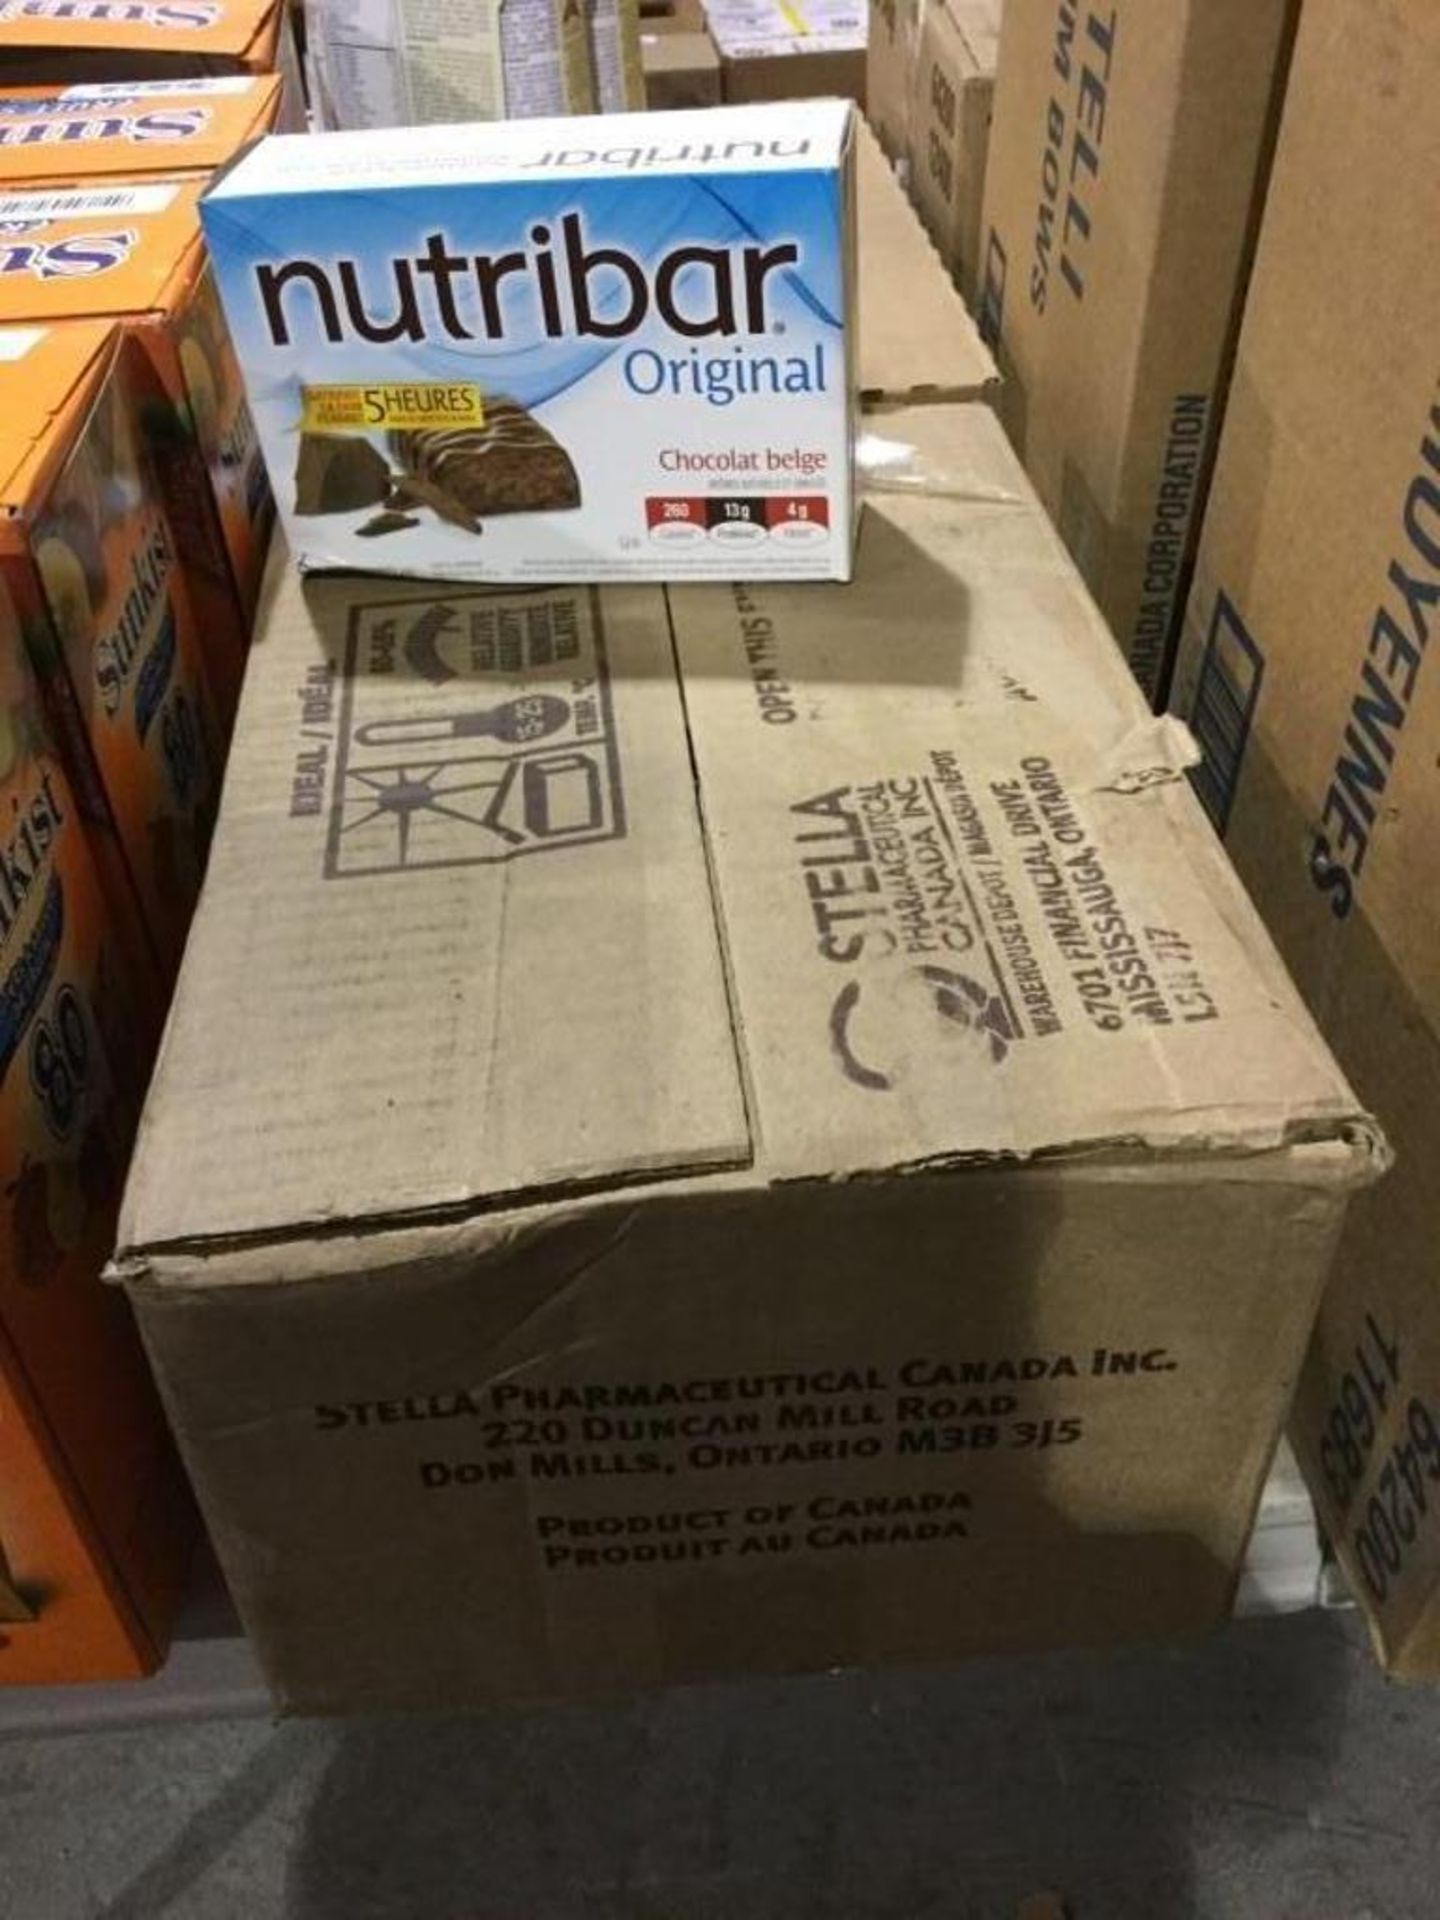 Case of Nutribar Original Belgian Chocolate bars